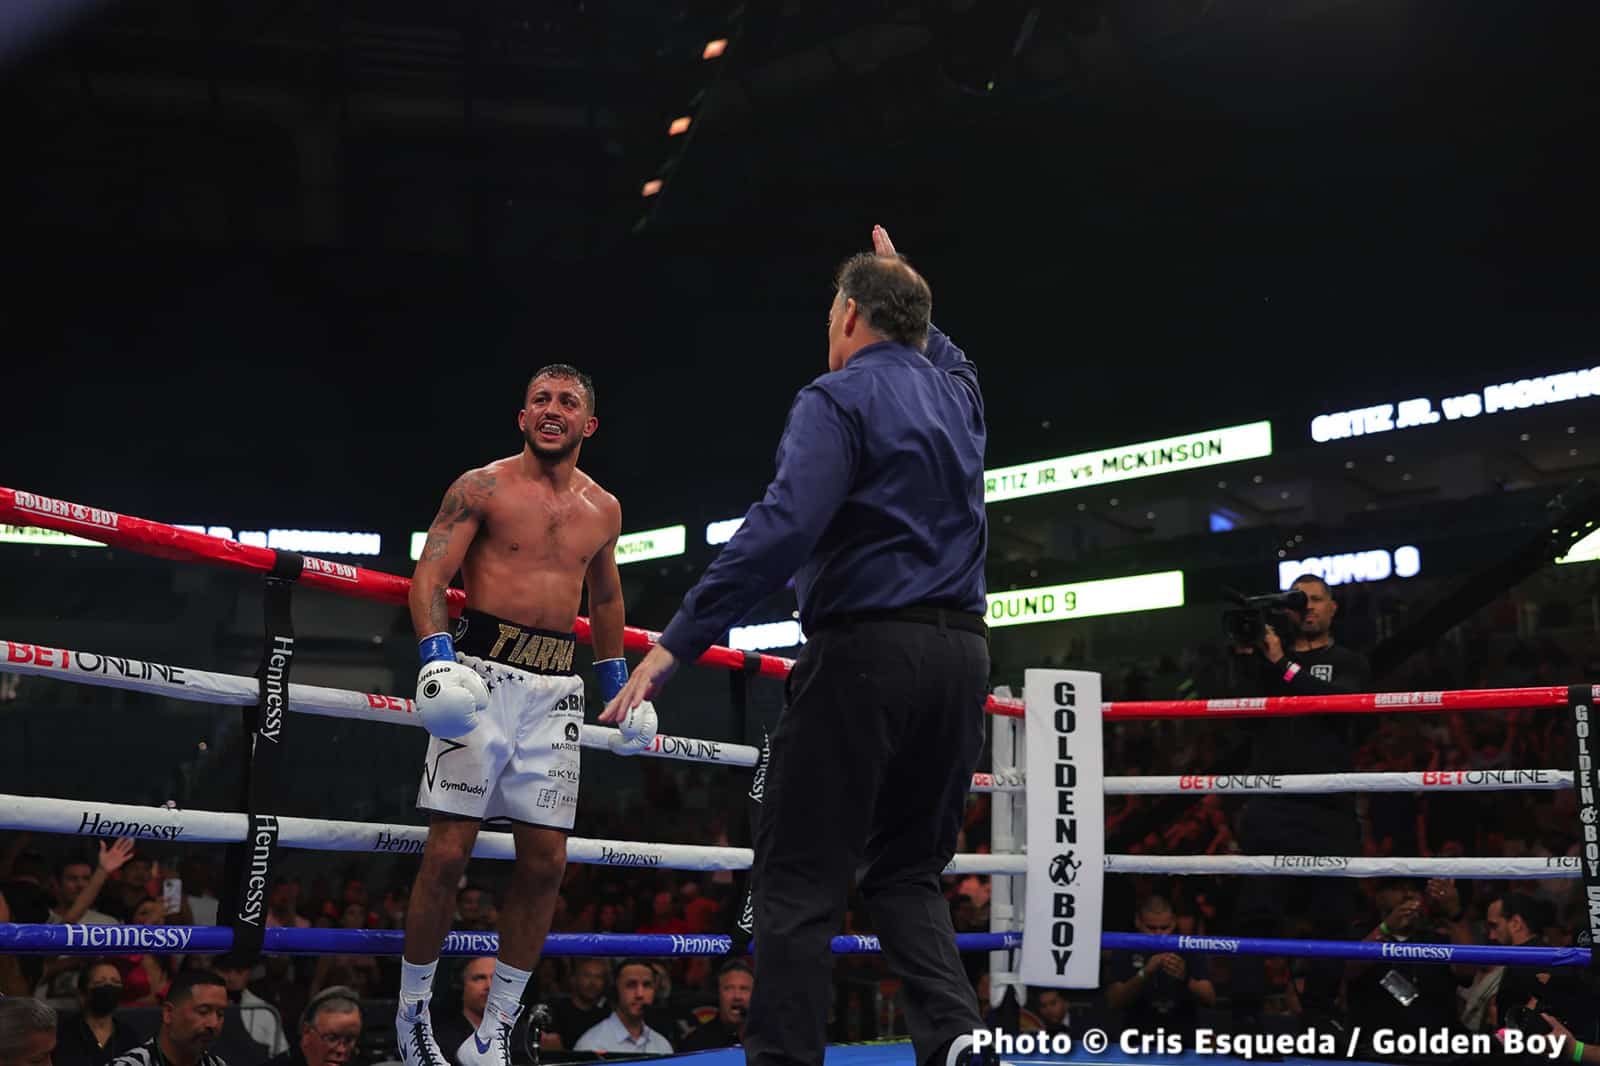 Image: Results / Photos: Ortiz Jr defeats McKinson, Esparza Successfull